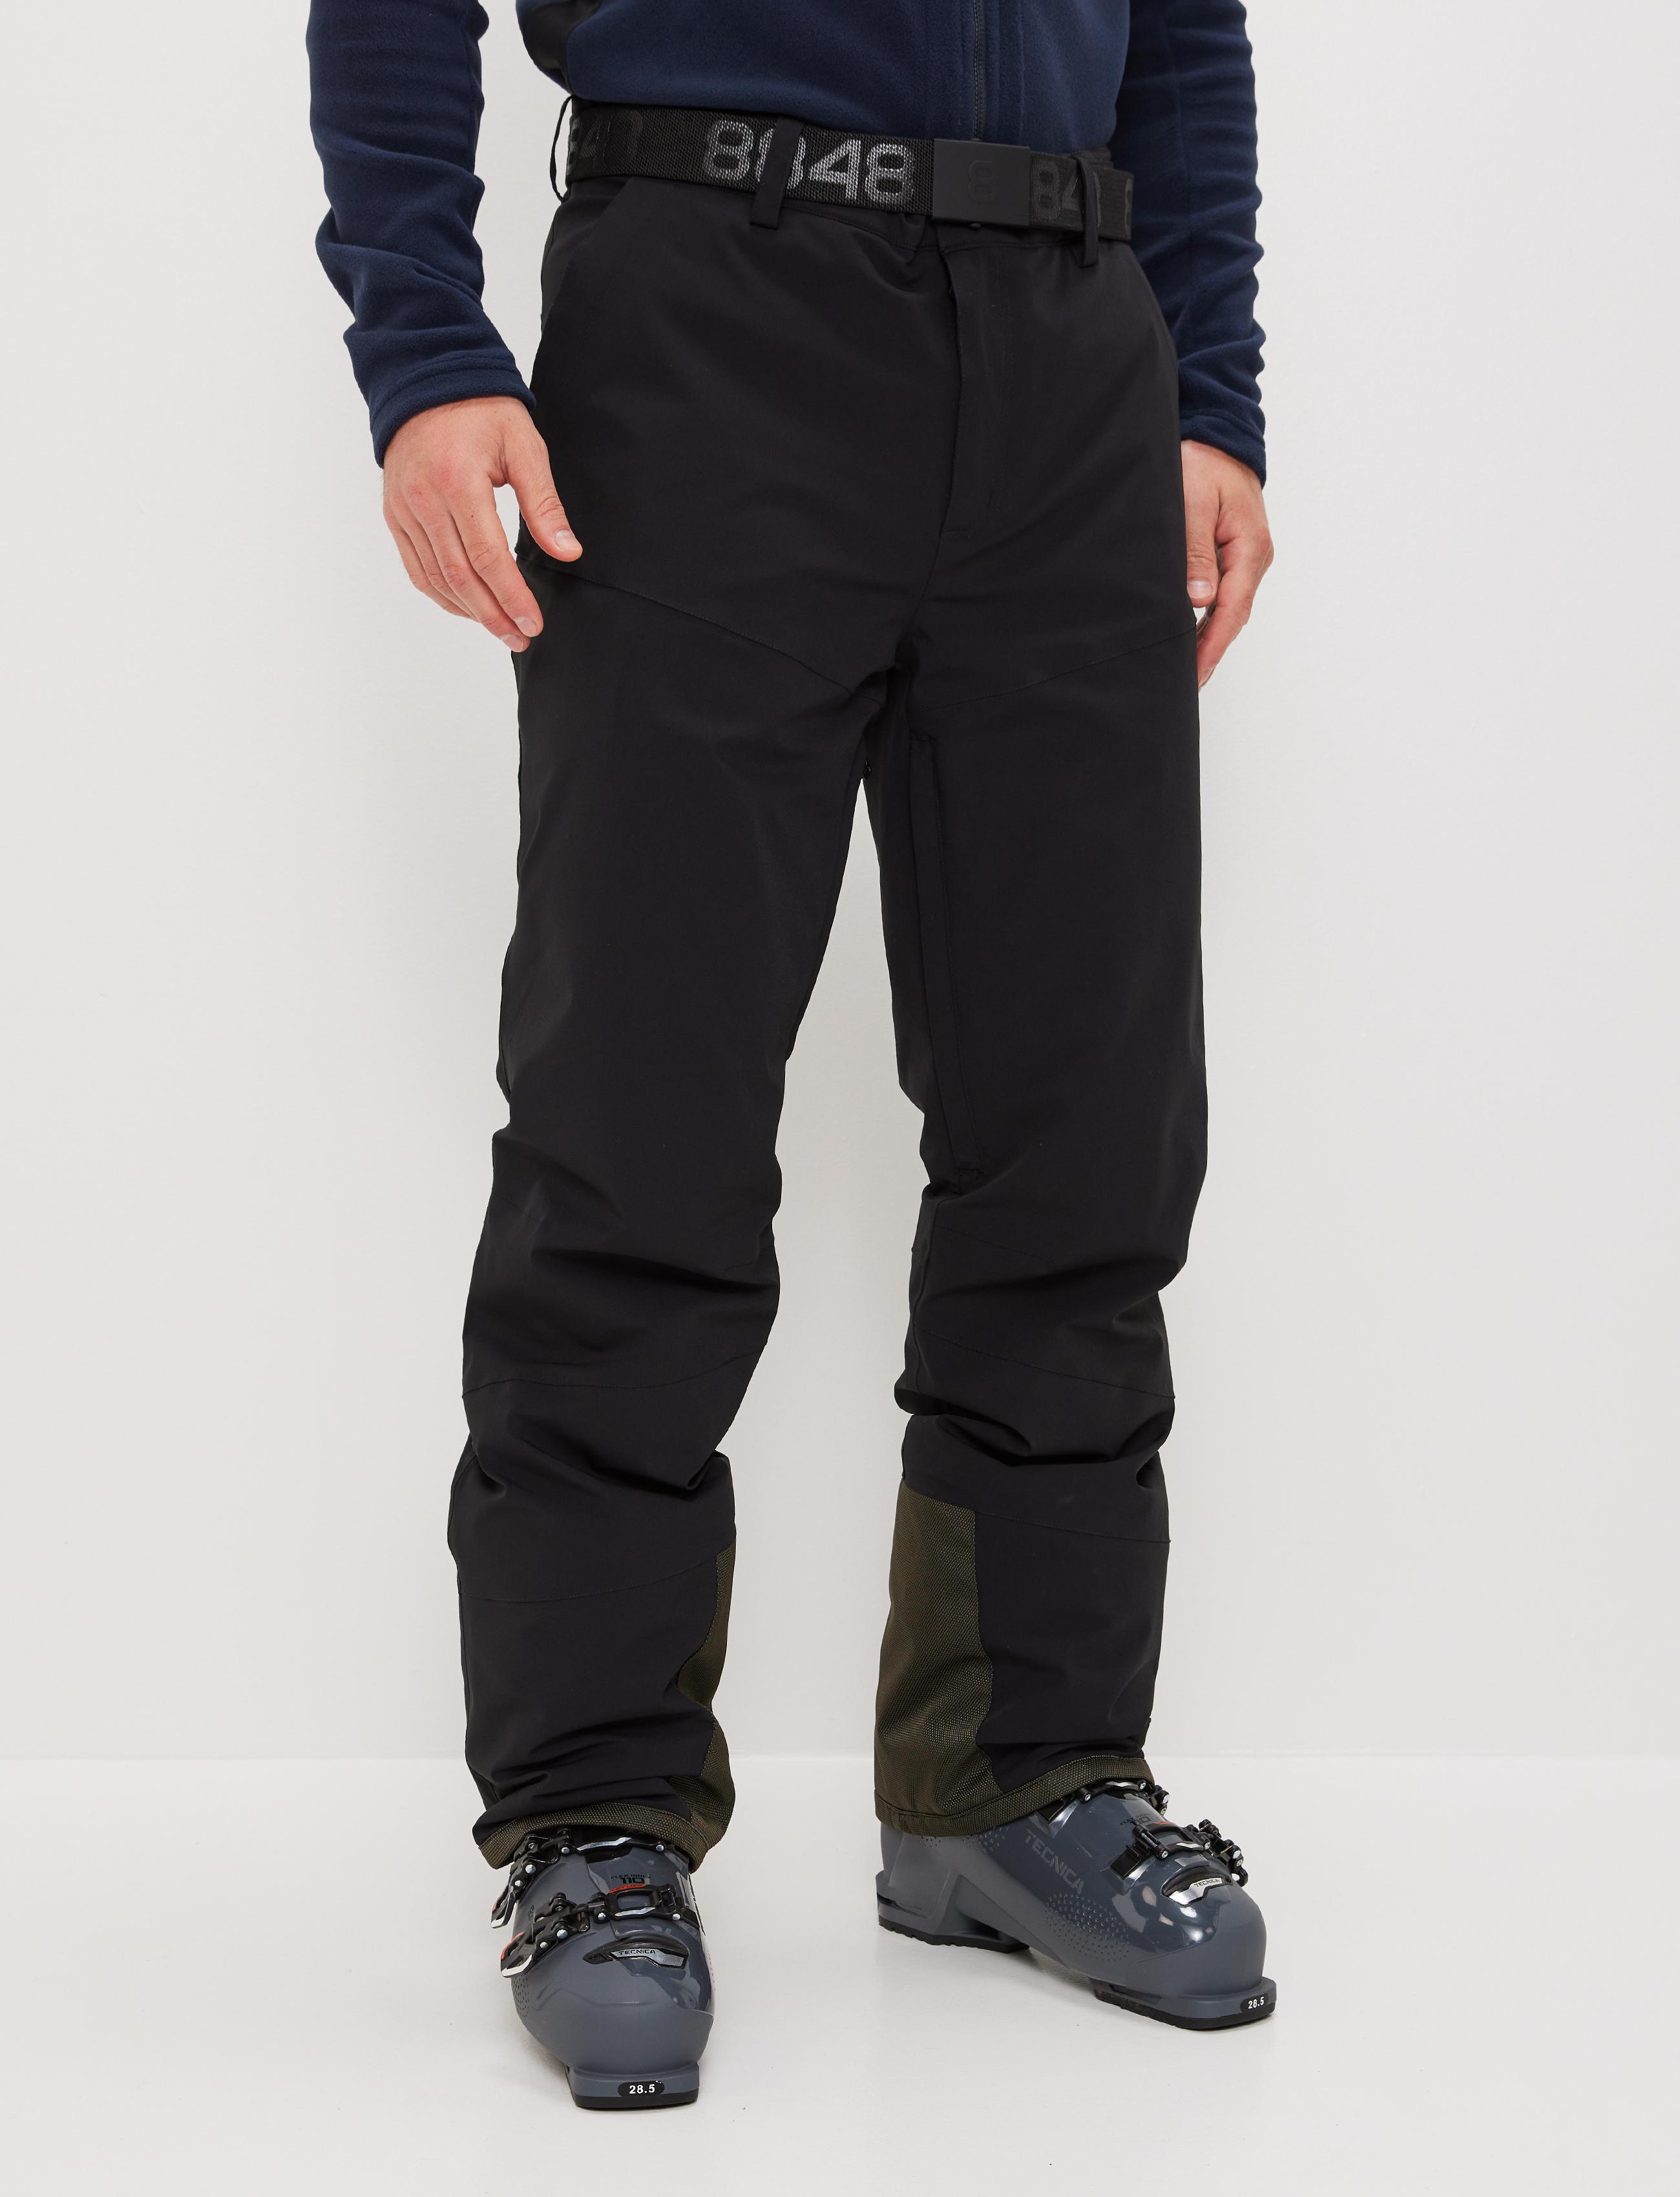 Discover more than 70 black ski pants super hot - in.eteachers